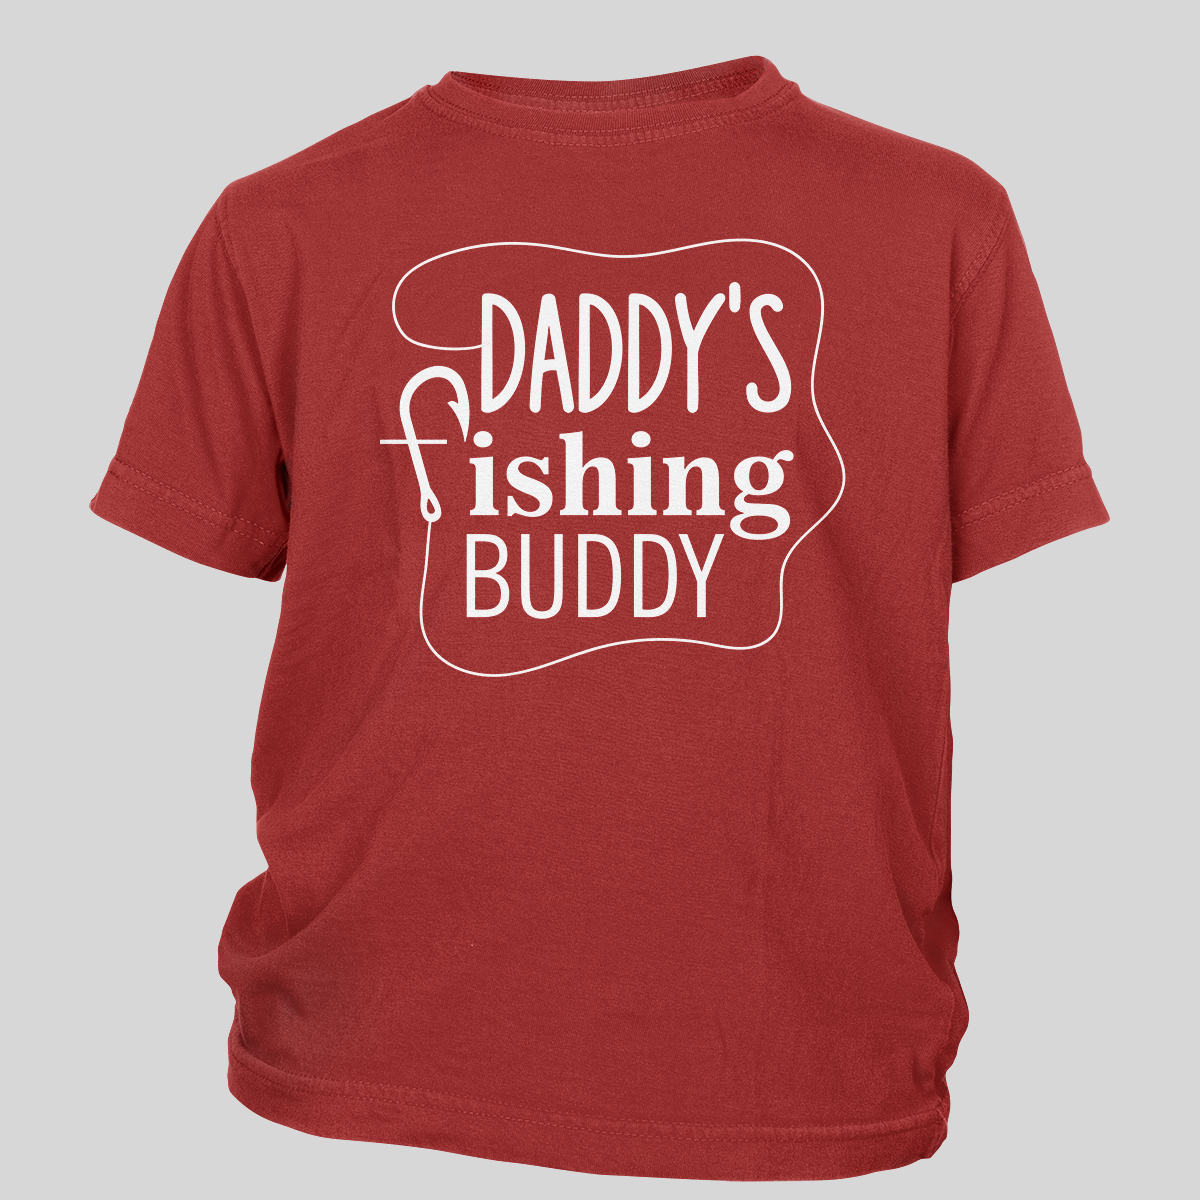 Daddy's Fishing Buddy Toddler Tees